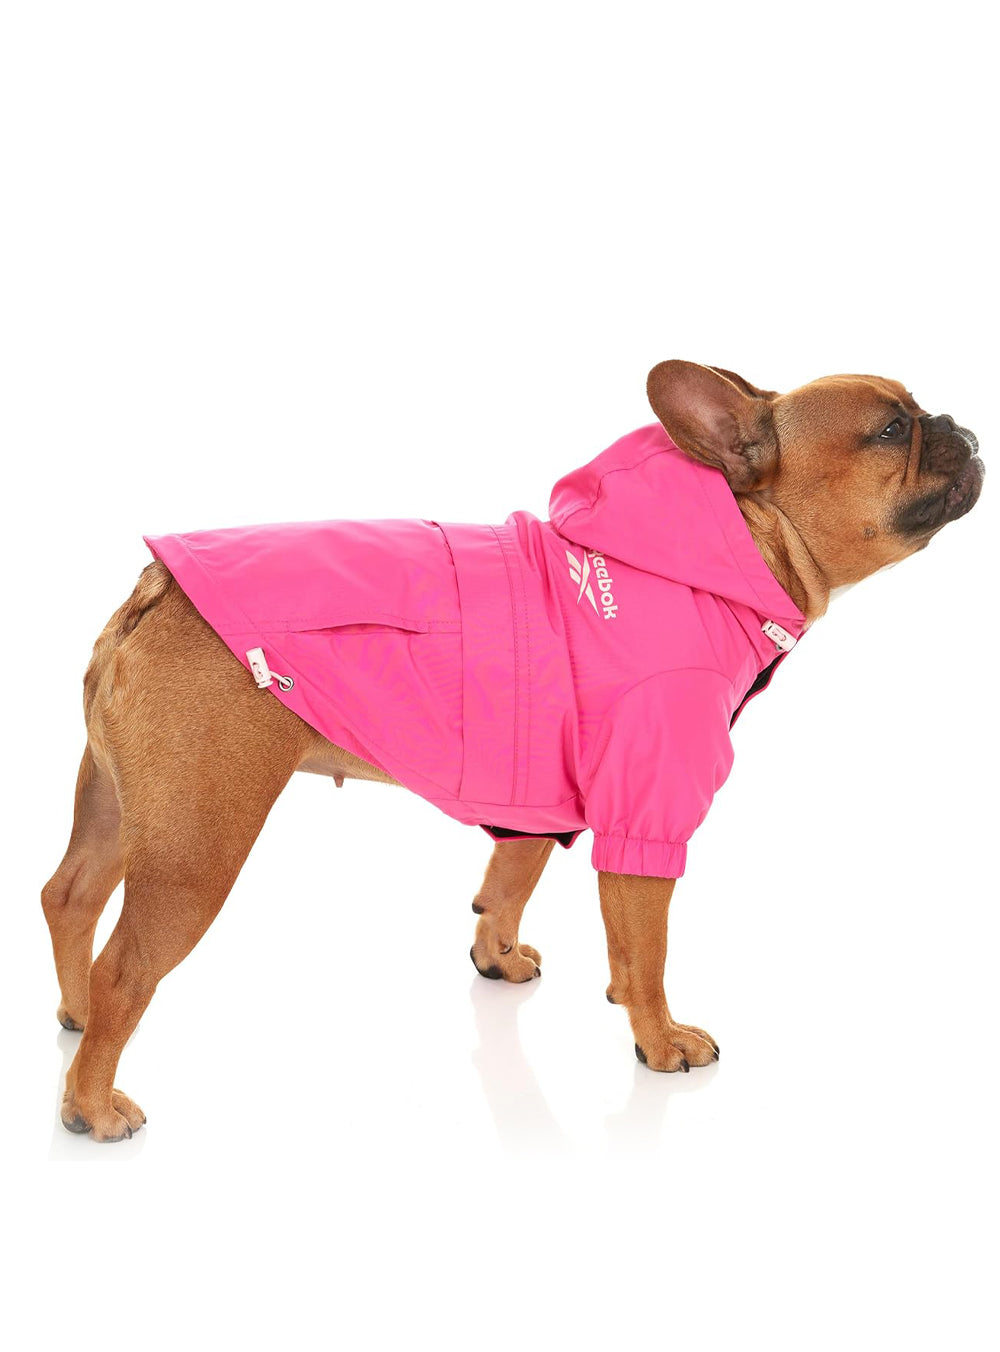 The Rainy Day Reebok Dog Jacket